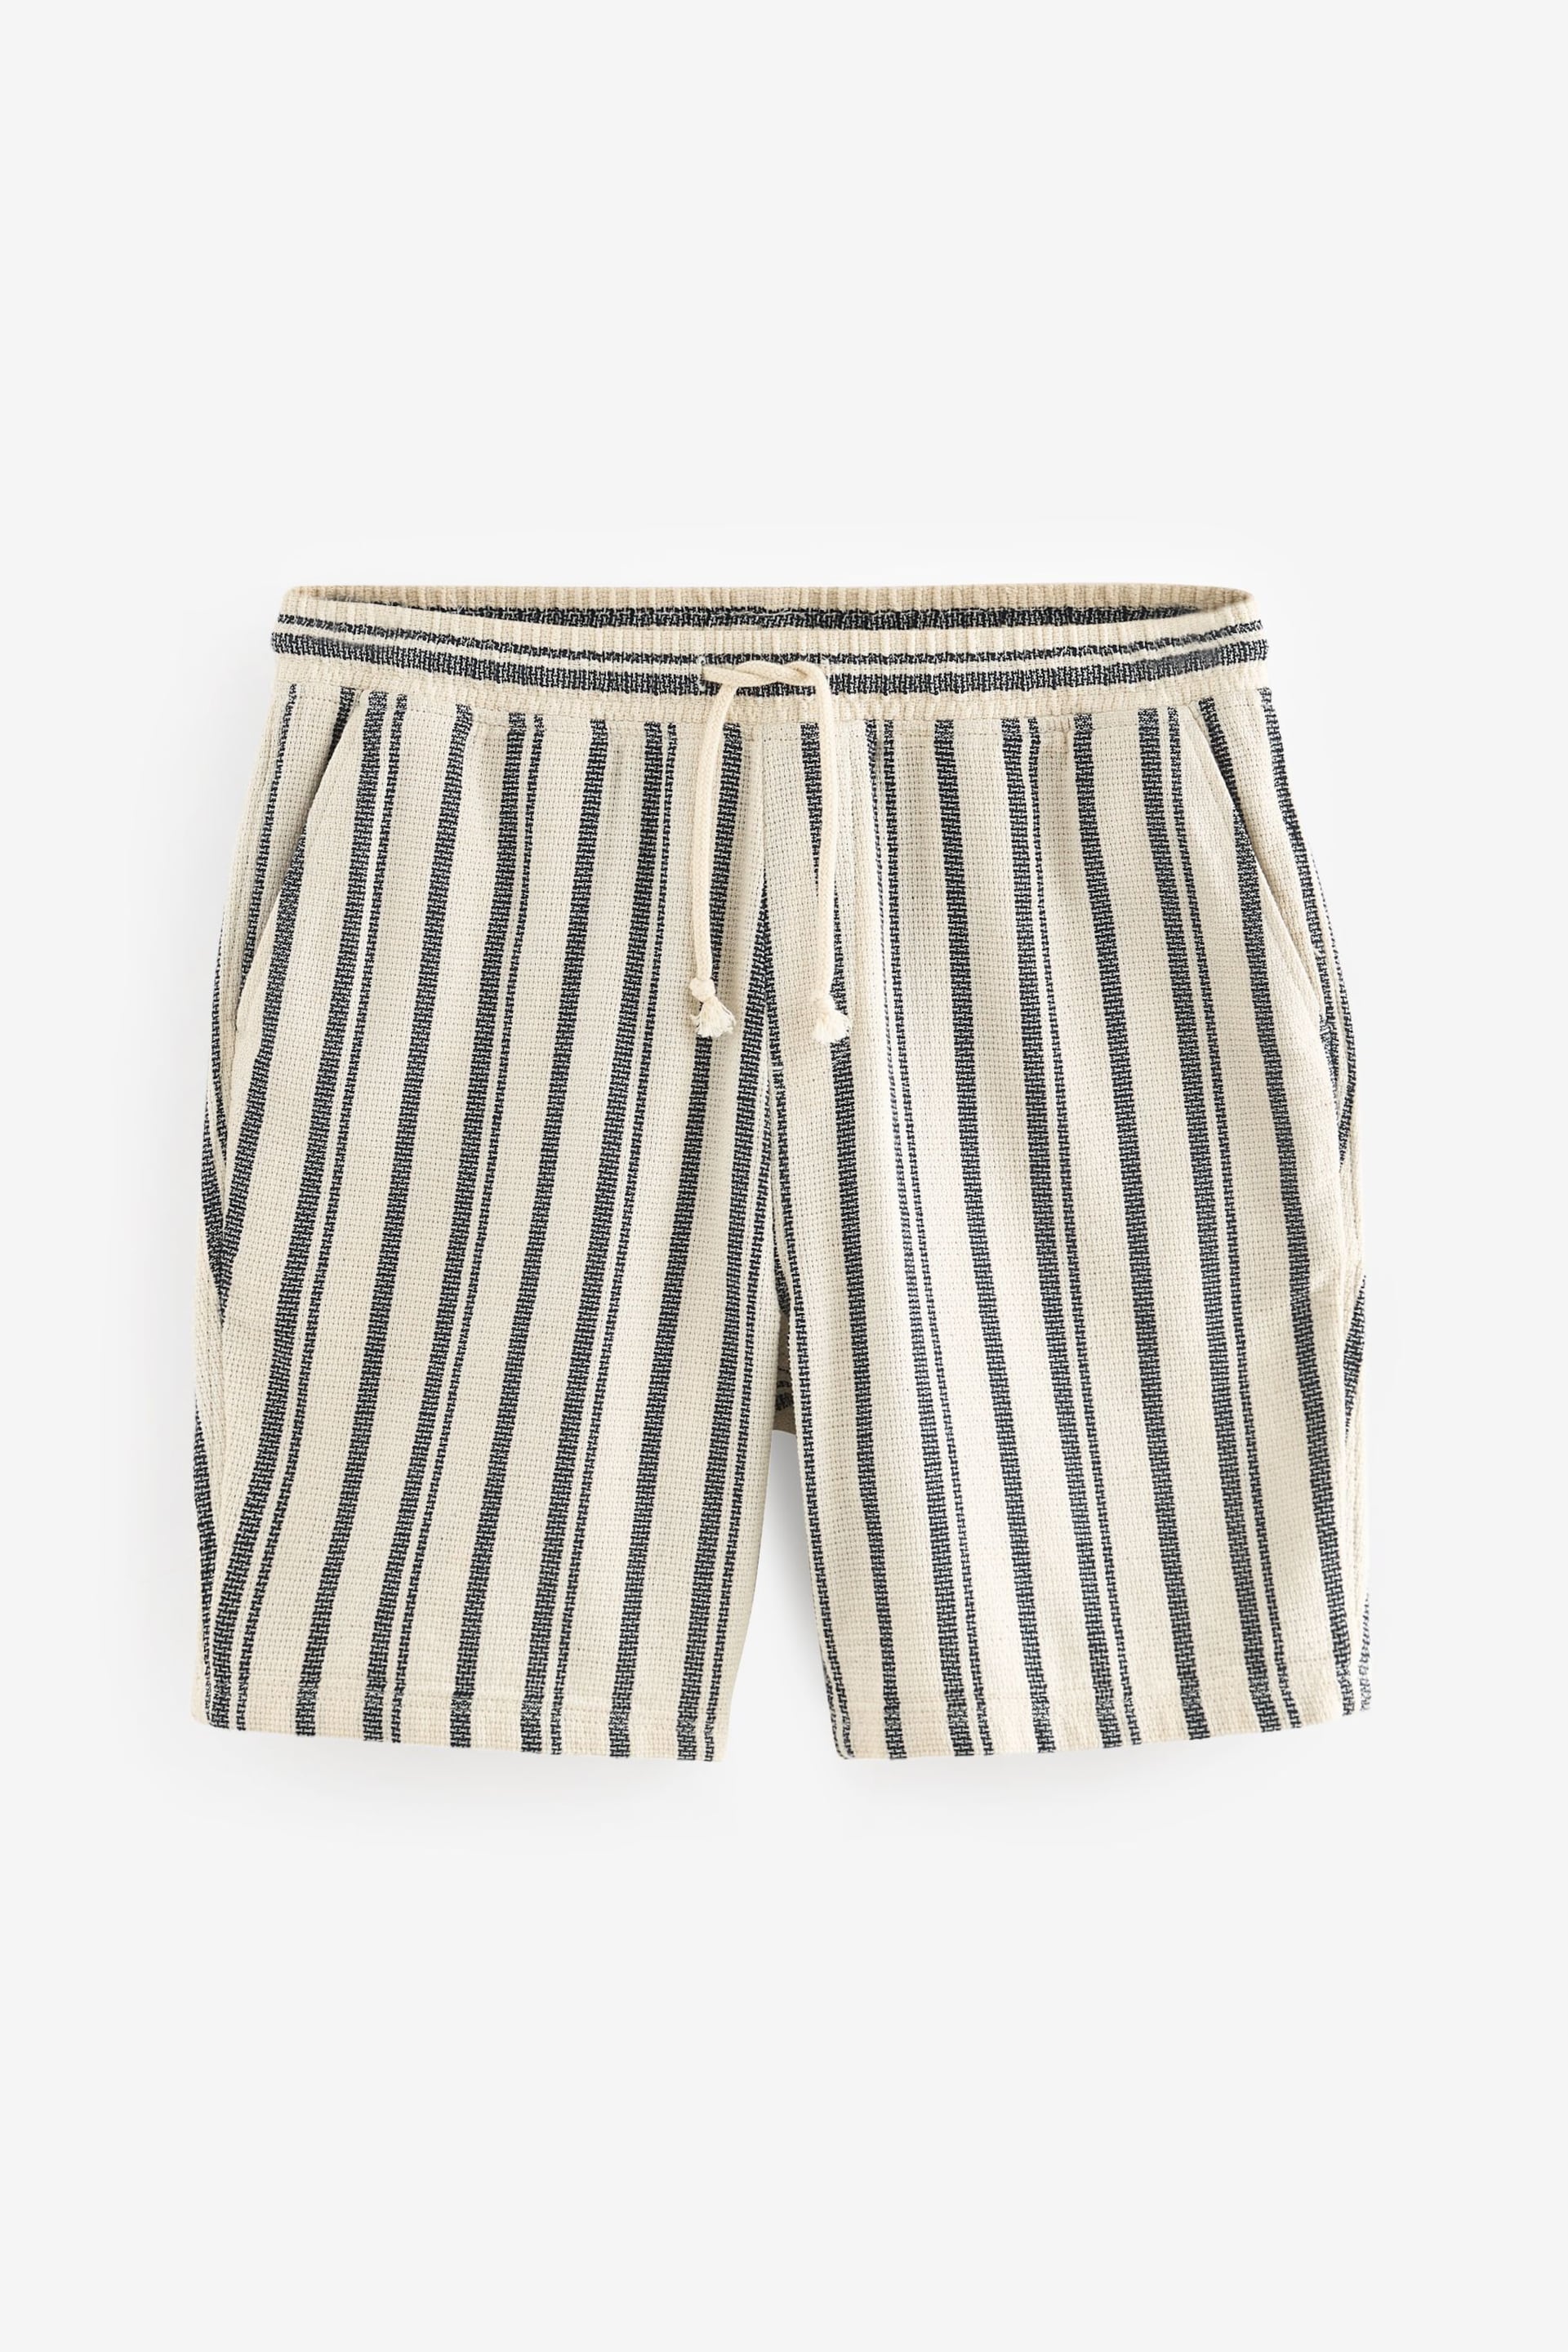 Ecru/Navy Striped Textured Dock Shorts - Image 5 of 8